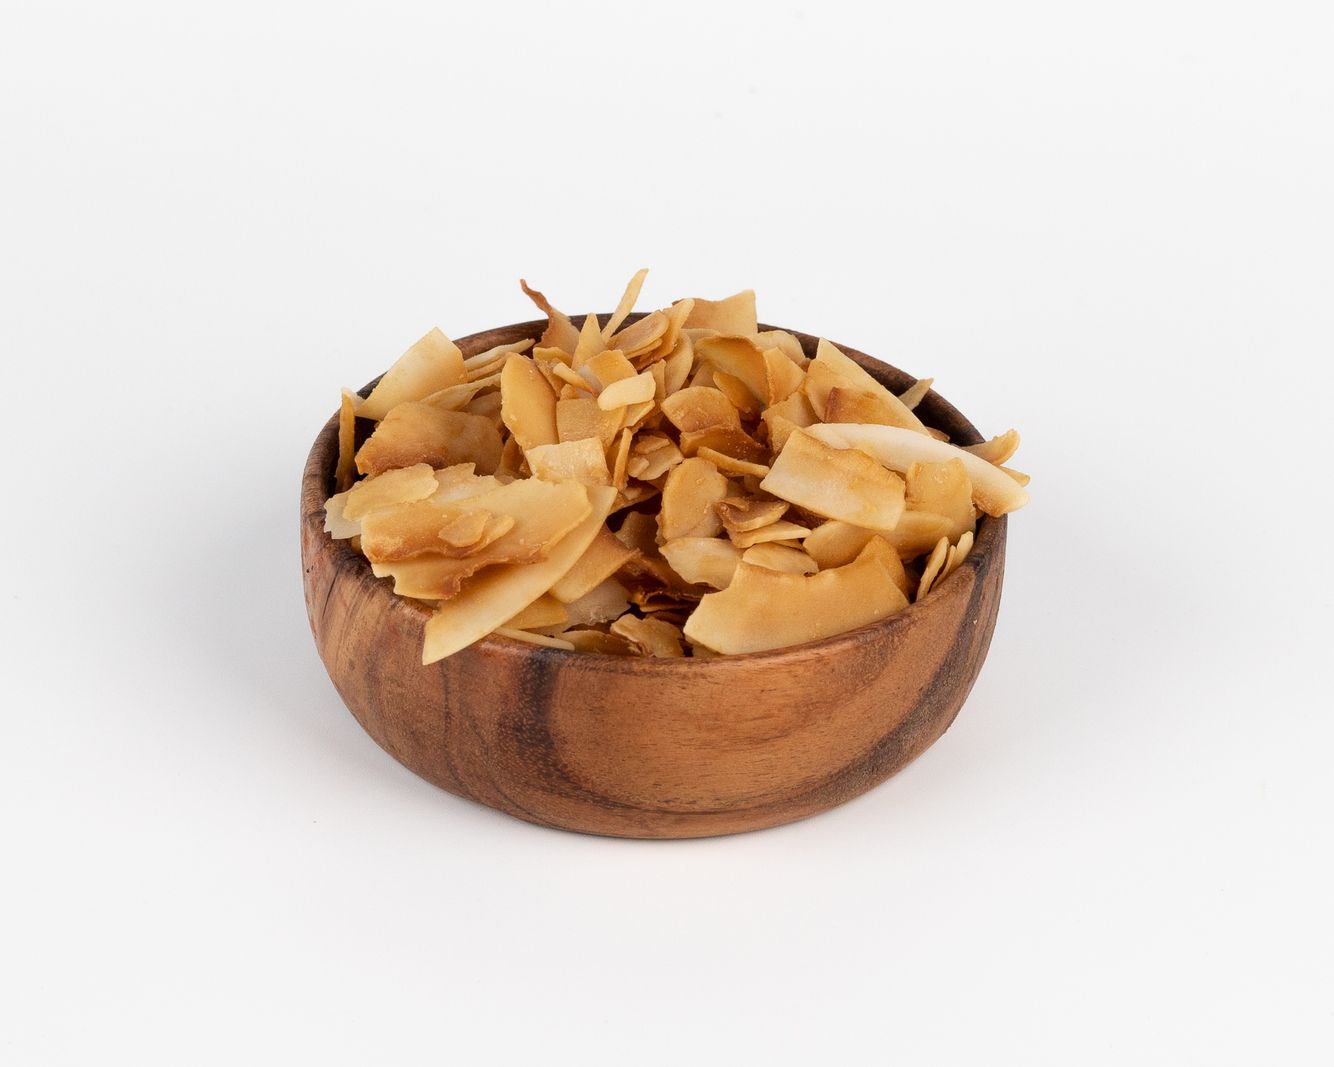 Vilgain Organic Coconut chips